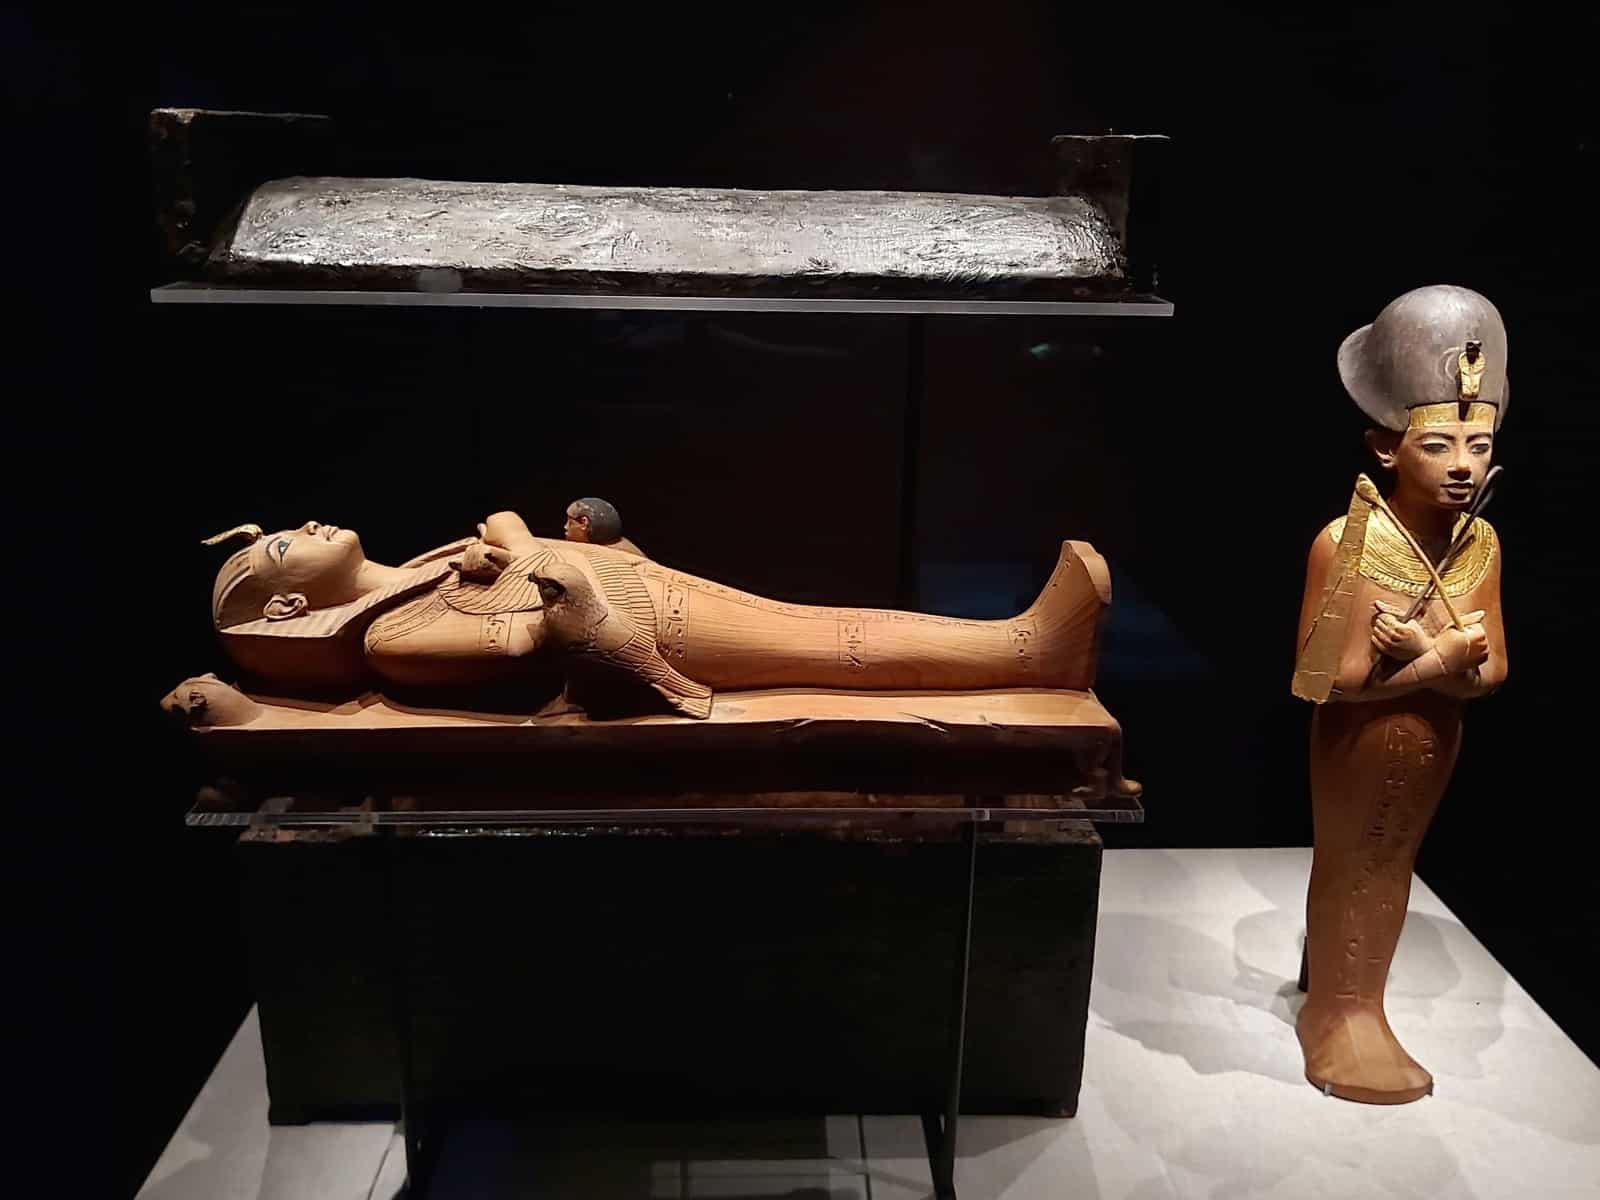 Visiting Tutankhamun: Treasures of the Golden Pharaoh with children